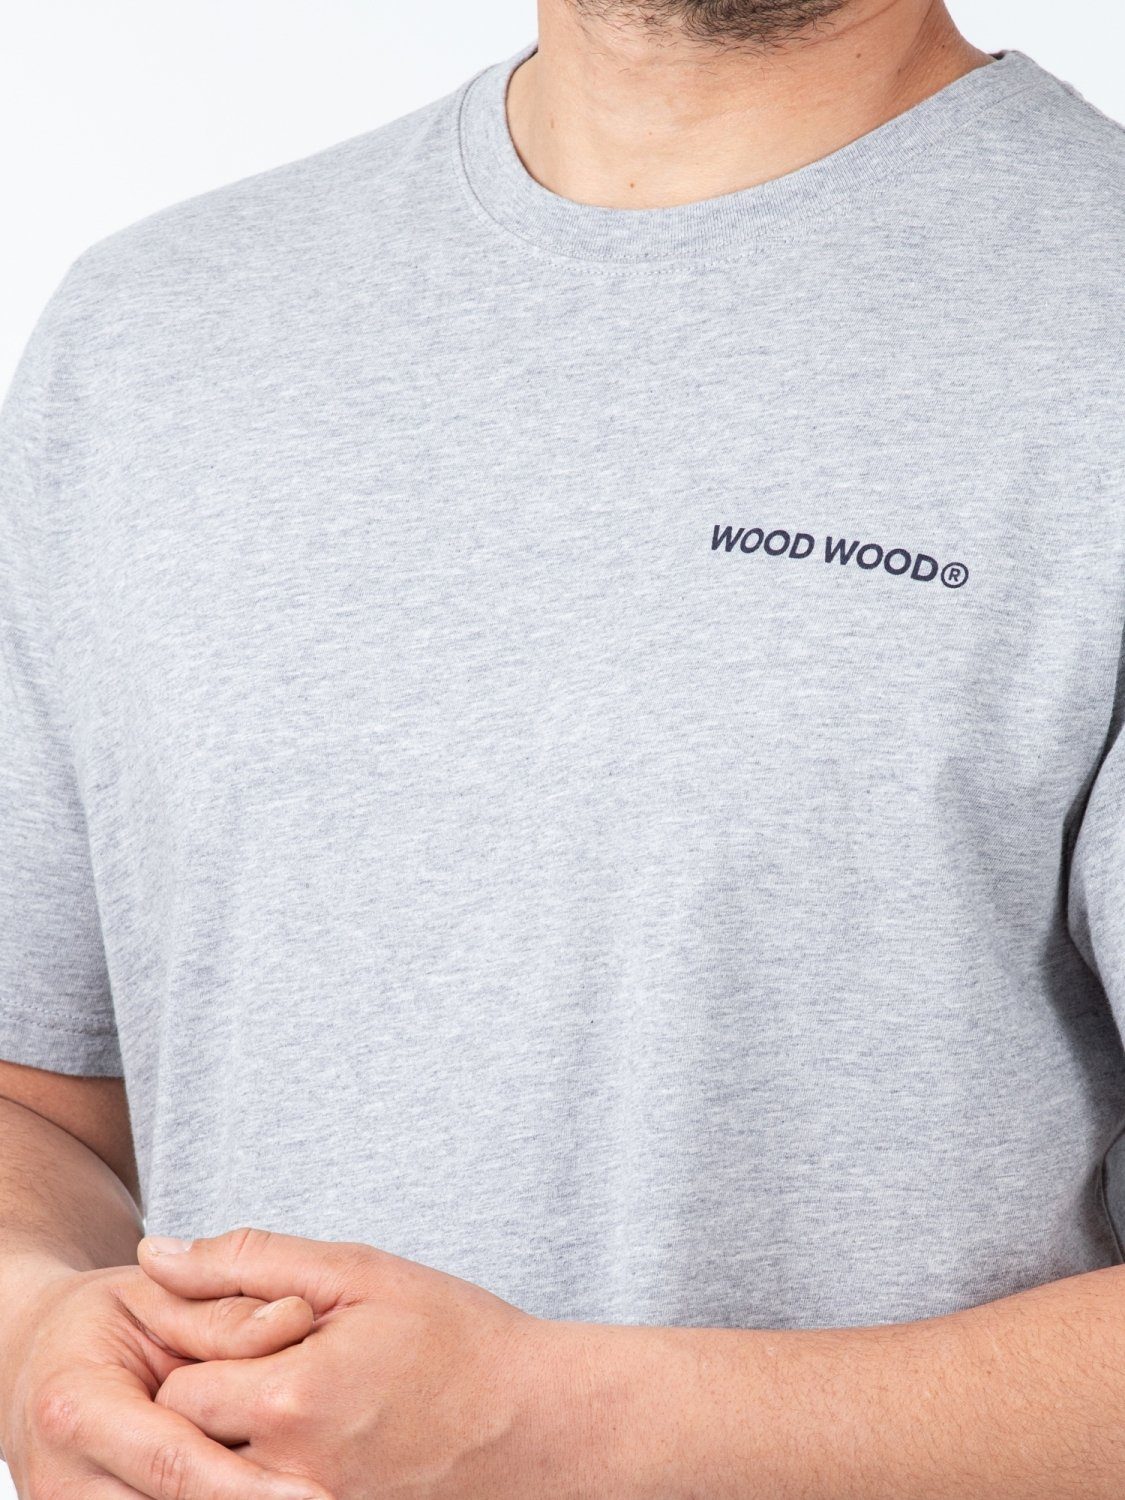 Tee Wood Logo Wood Grey T-Shirt Melange WOOD WOOD Sami